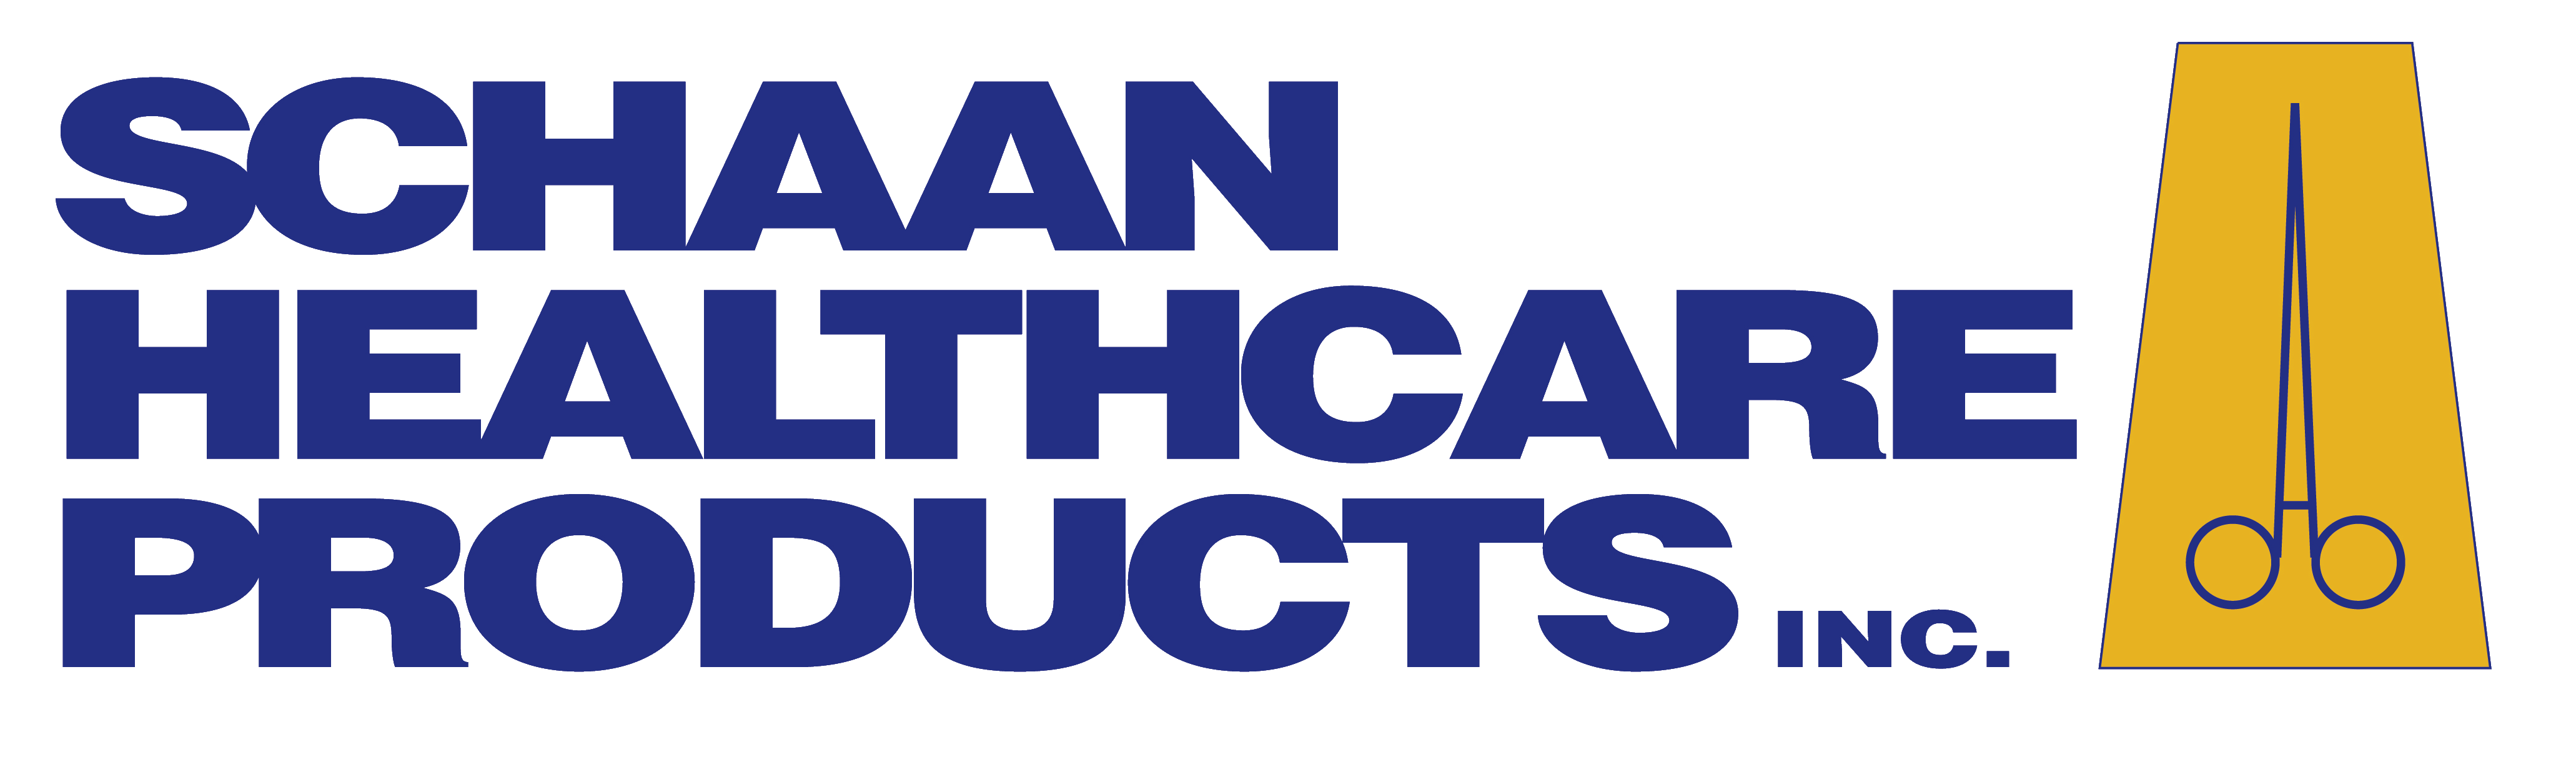 schaan-healthcare-products-logo-1.png